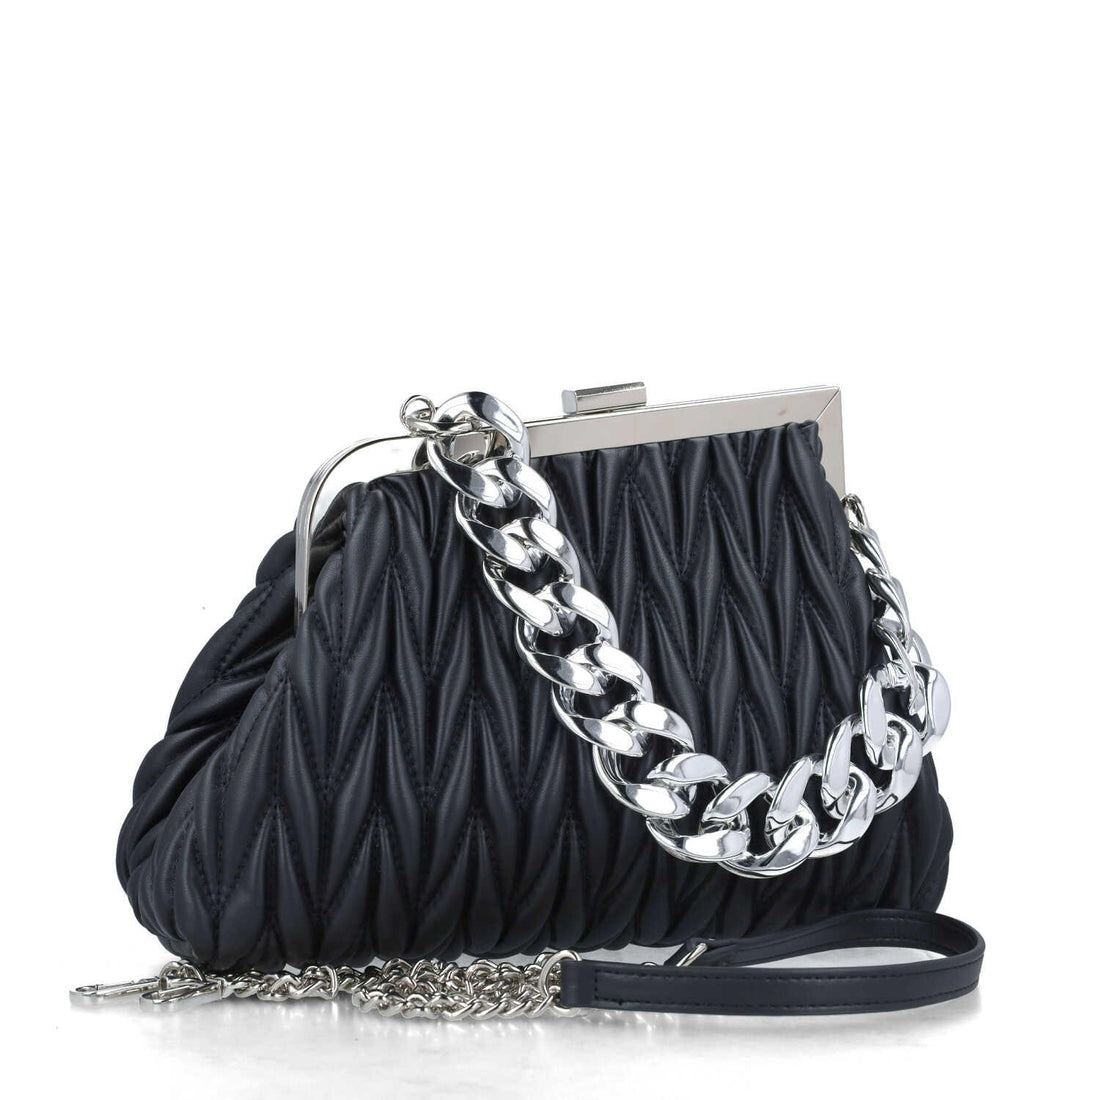 Black Handbag With Chain Strap_85678_01_02